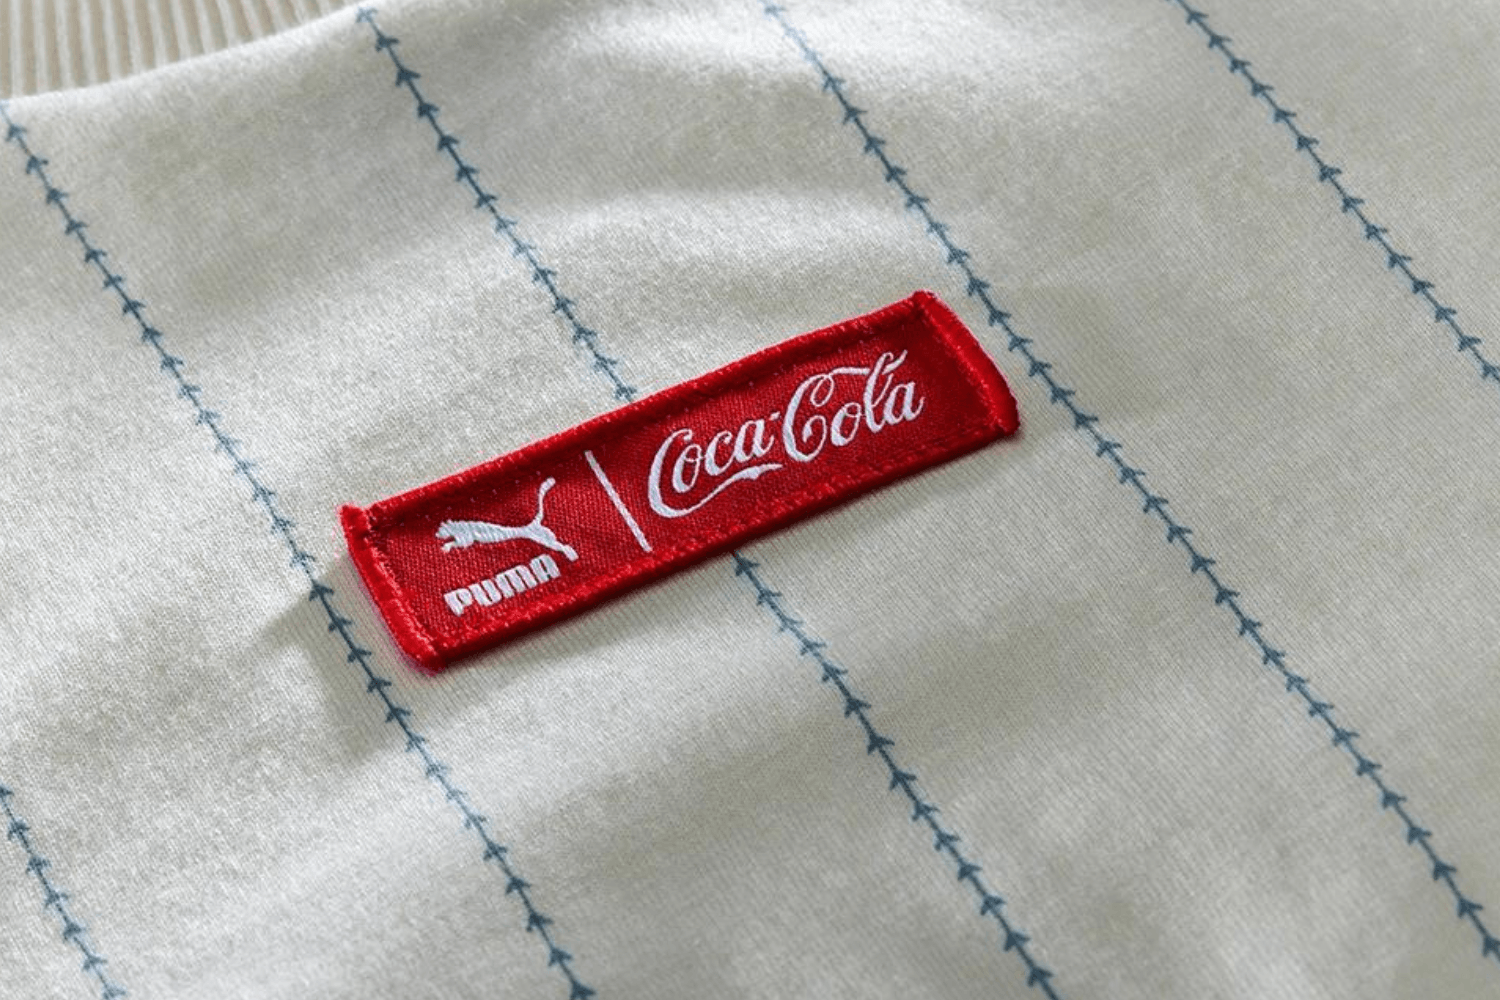 Coca-Cola collaborates with PUMA for nostalgic collection